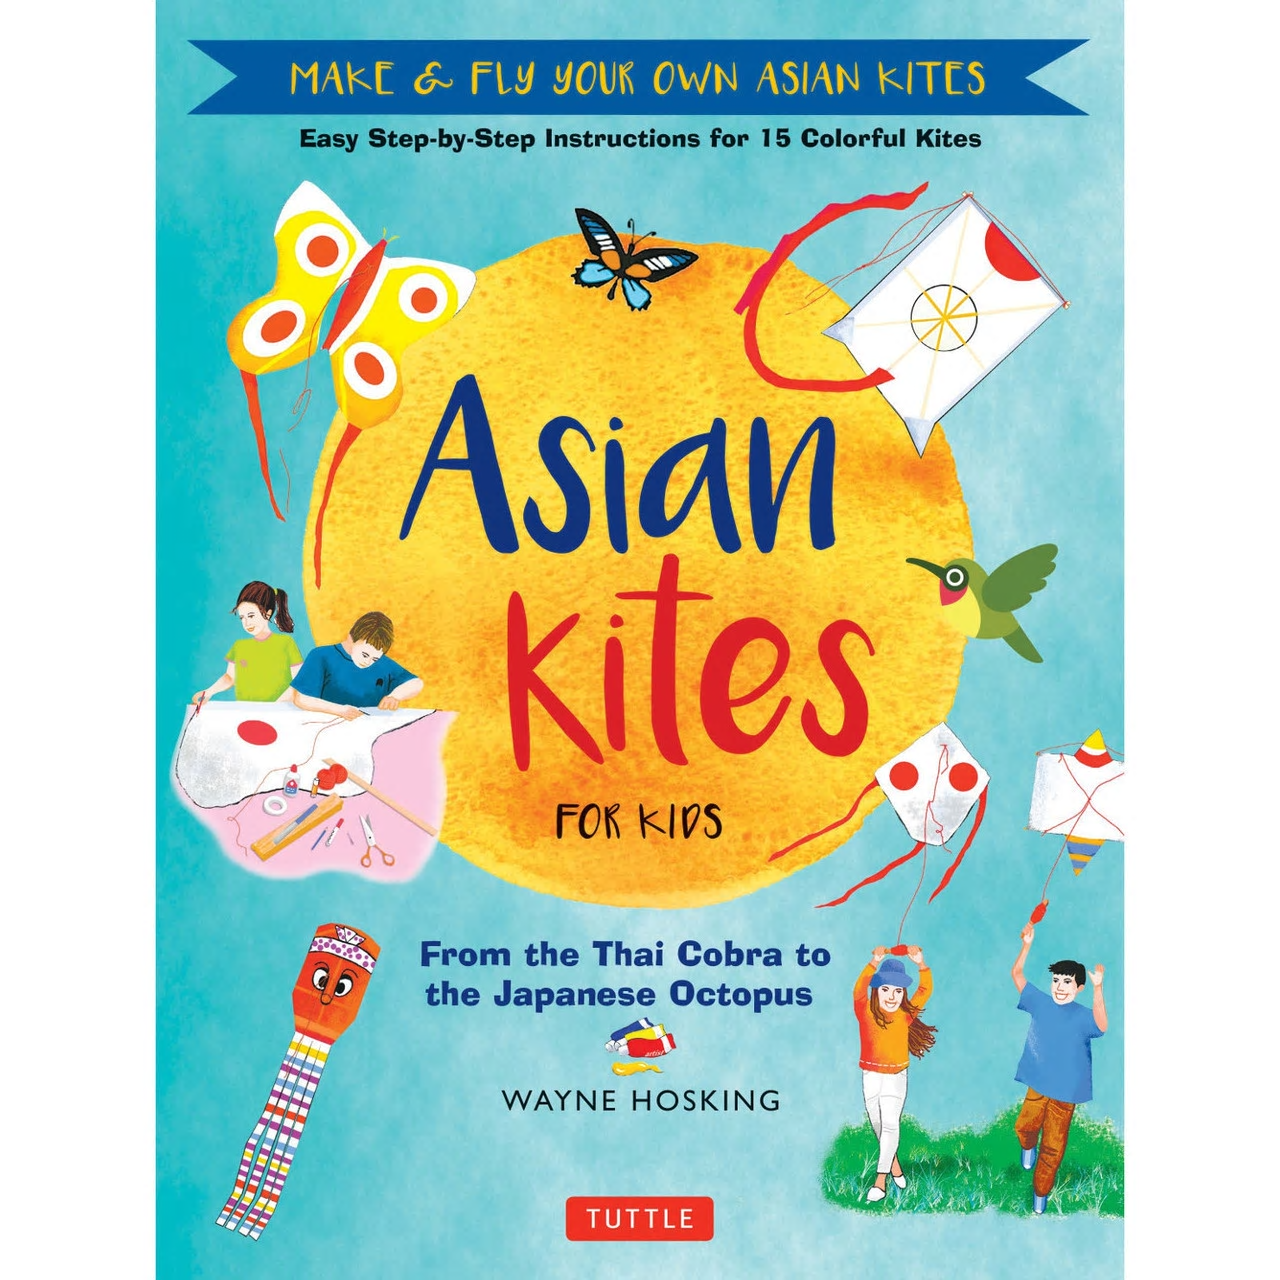 kite making ideas book reviewe